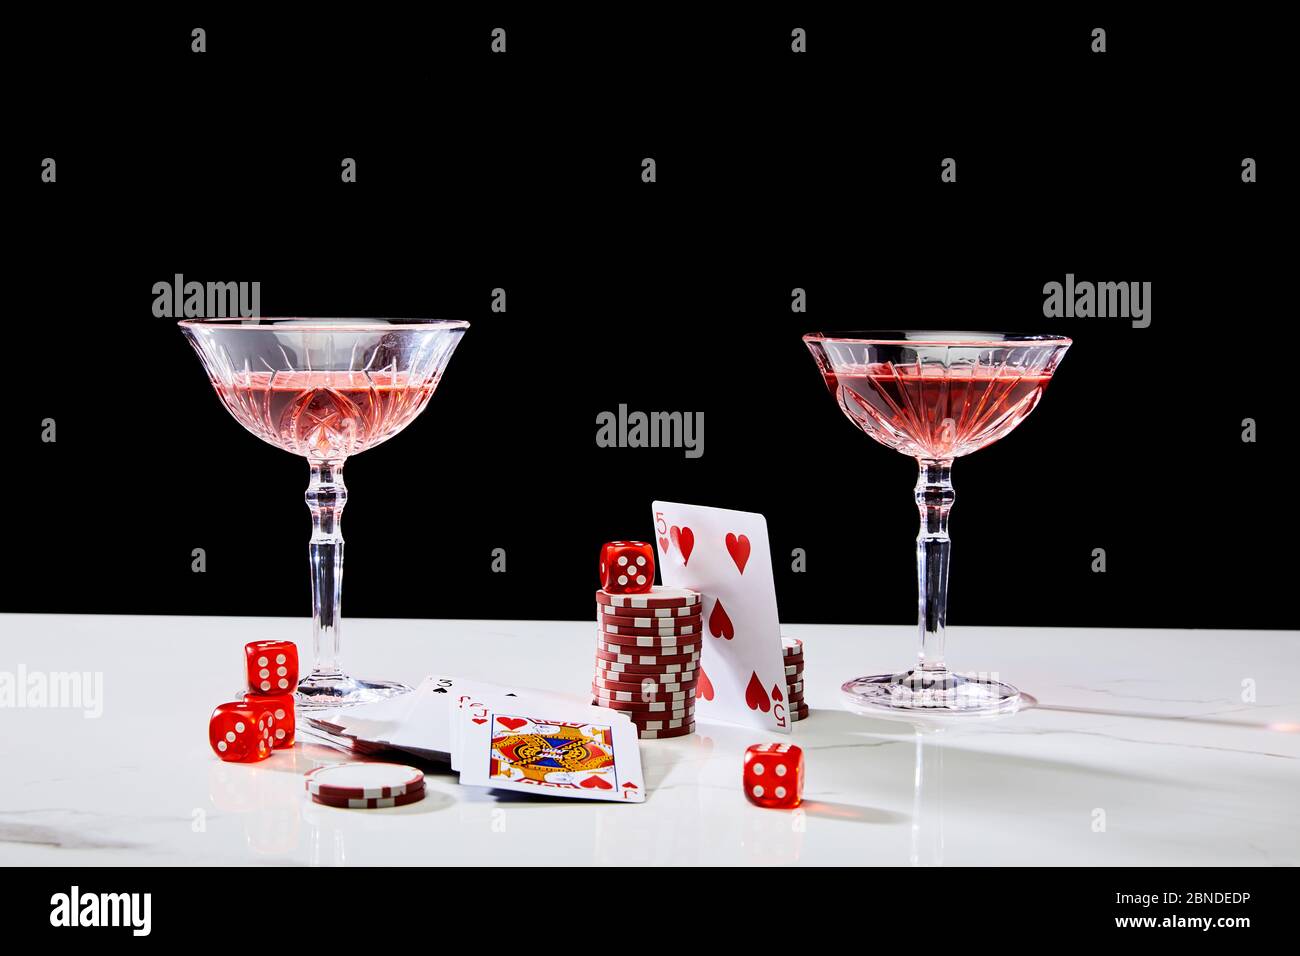 Money Playing Cards Bone – Stock Editorial Photo © sparkas.inbox.lv  #664104508